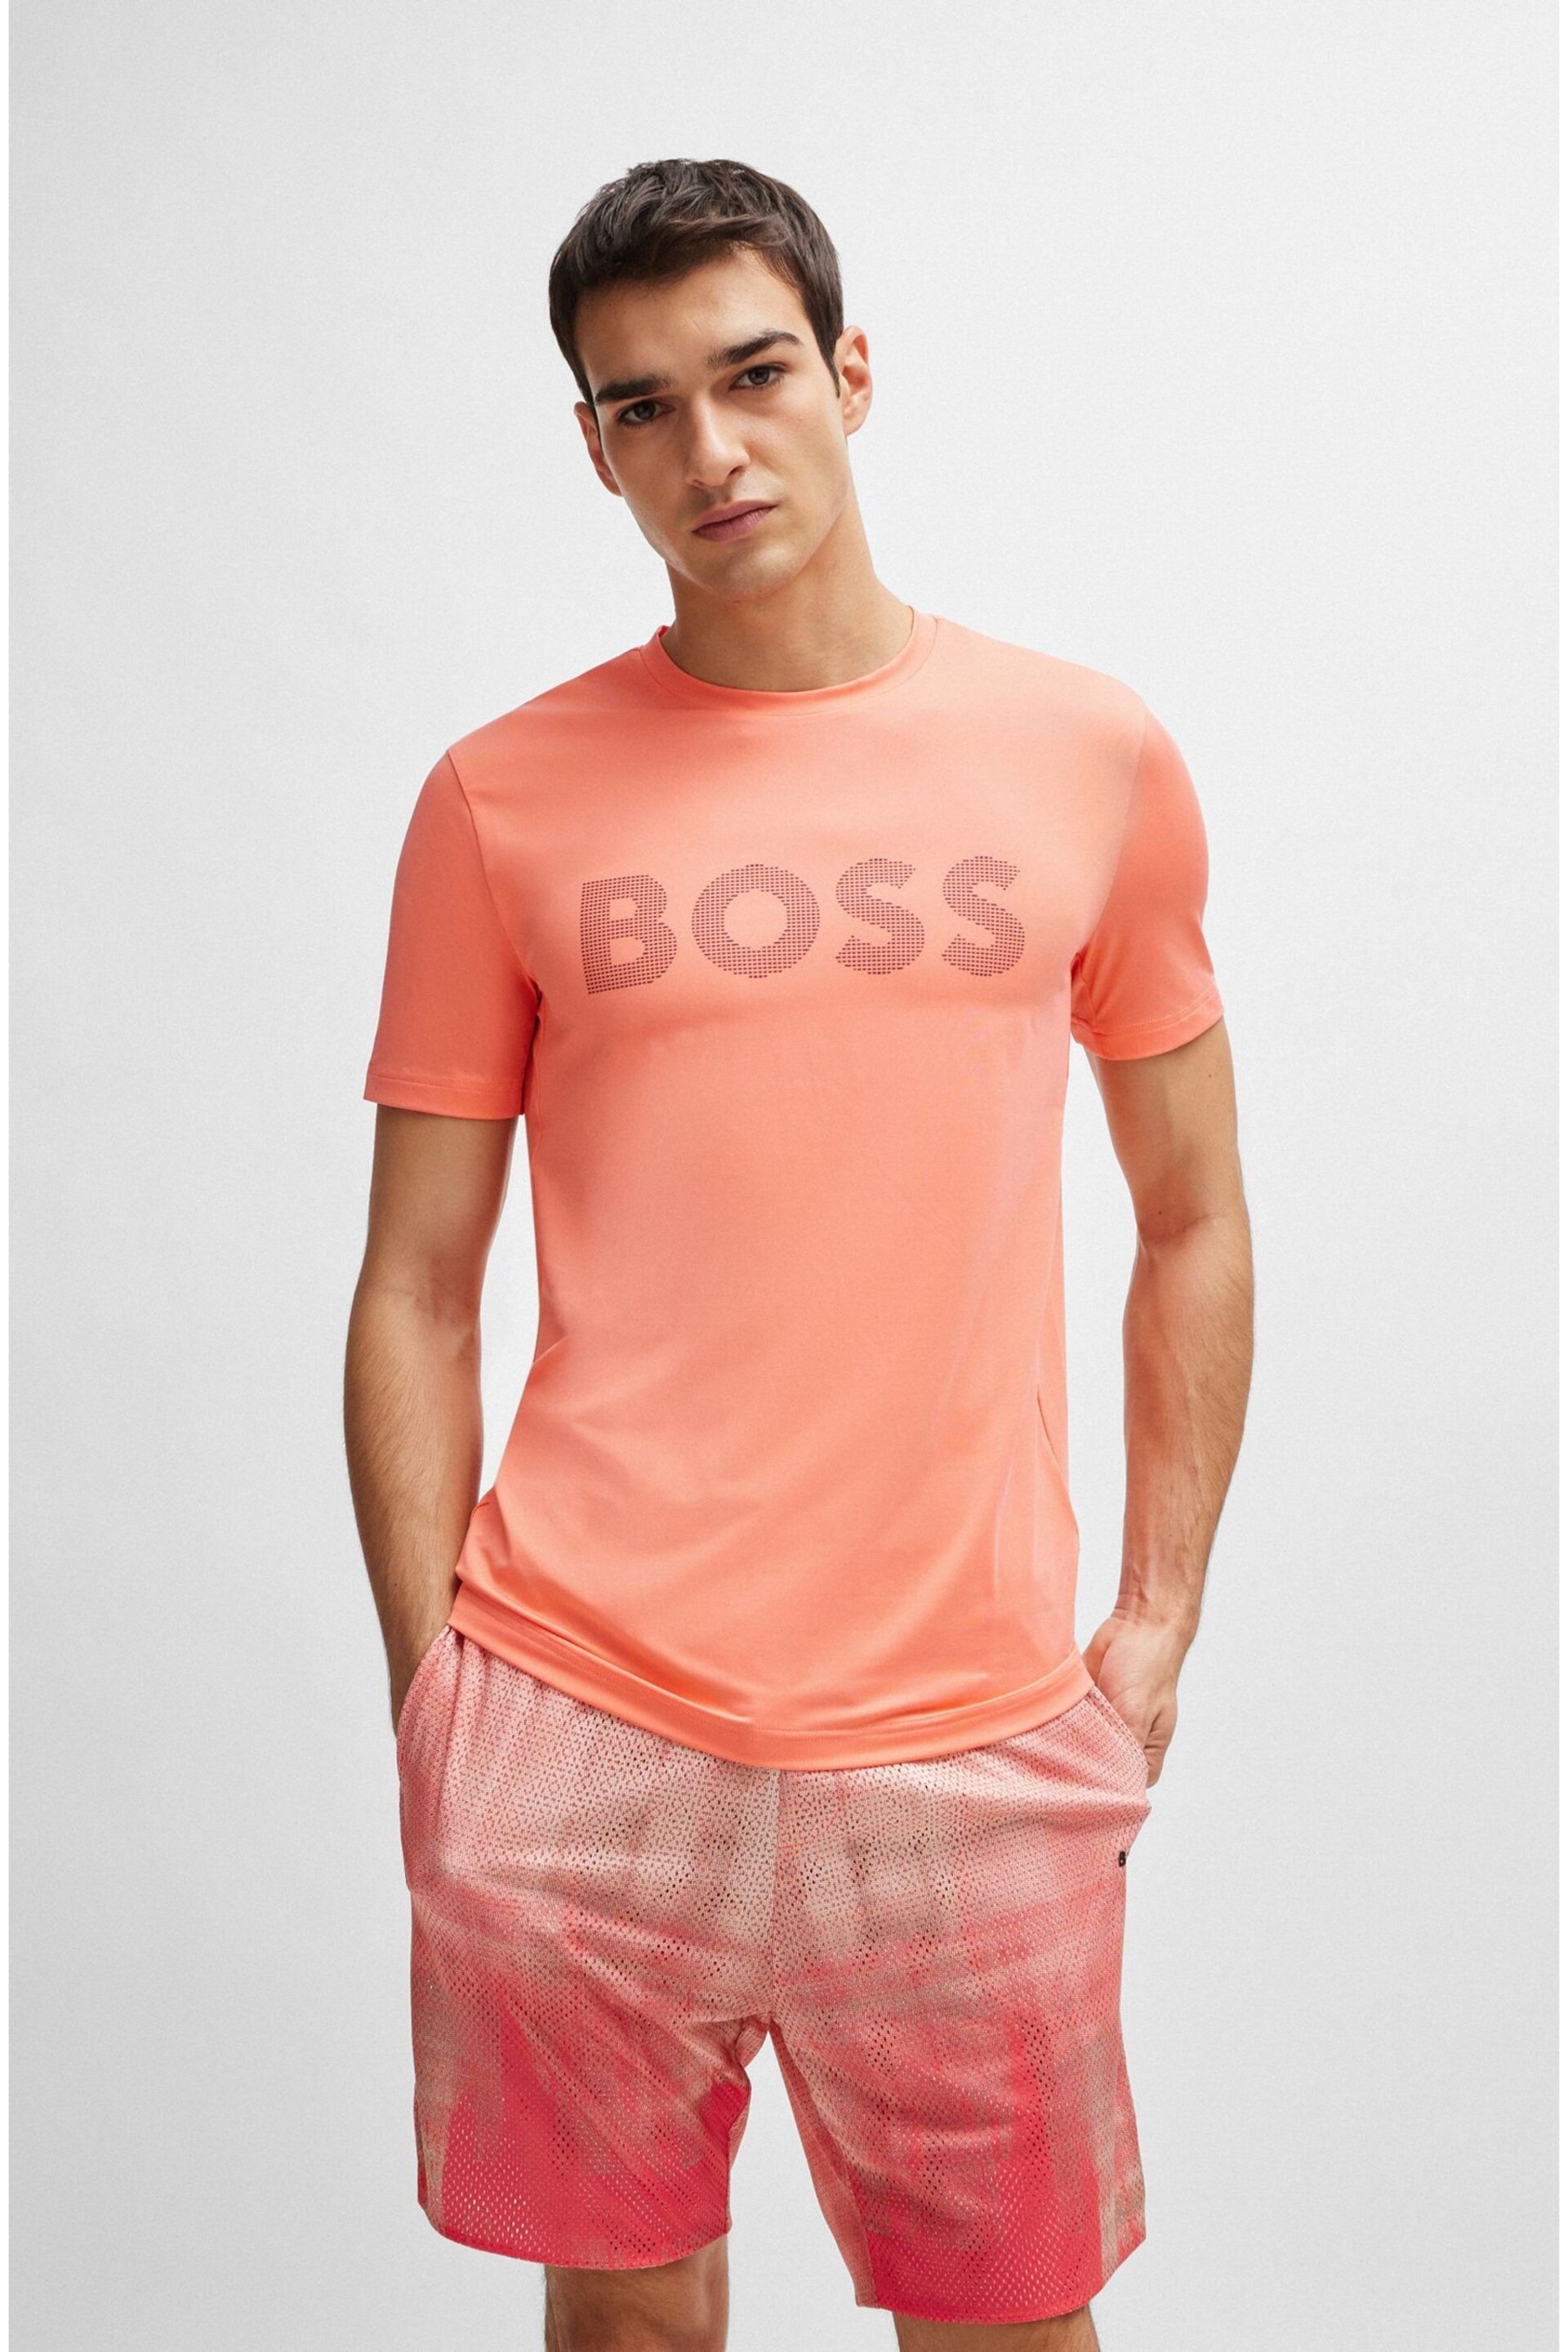 BOSS Orange Tonal Large Chest Logo Performance-Stretch T-Shirt - Image 2 of 3